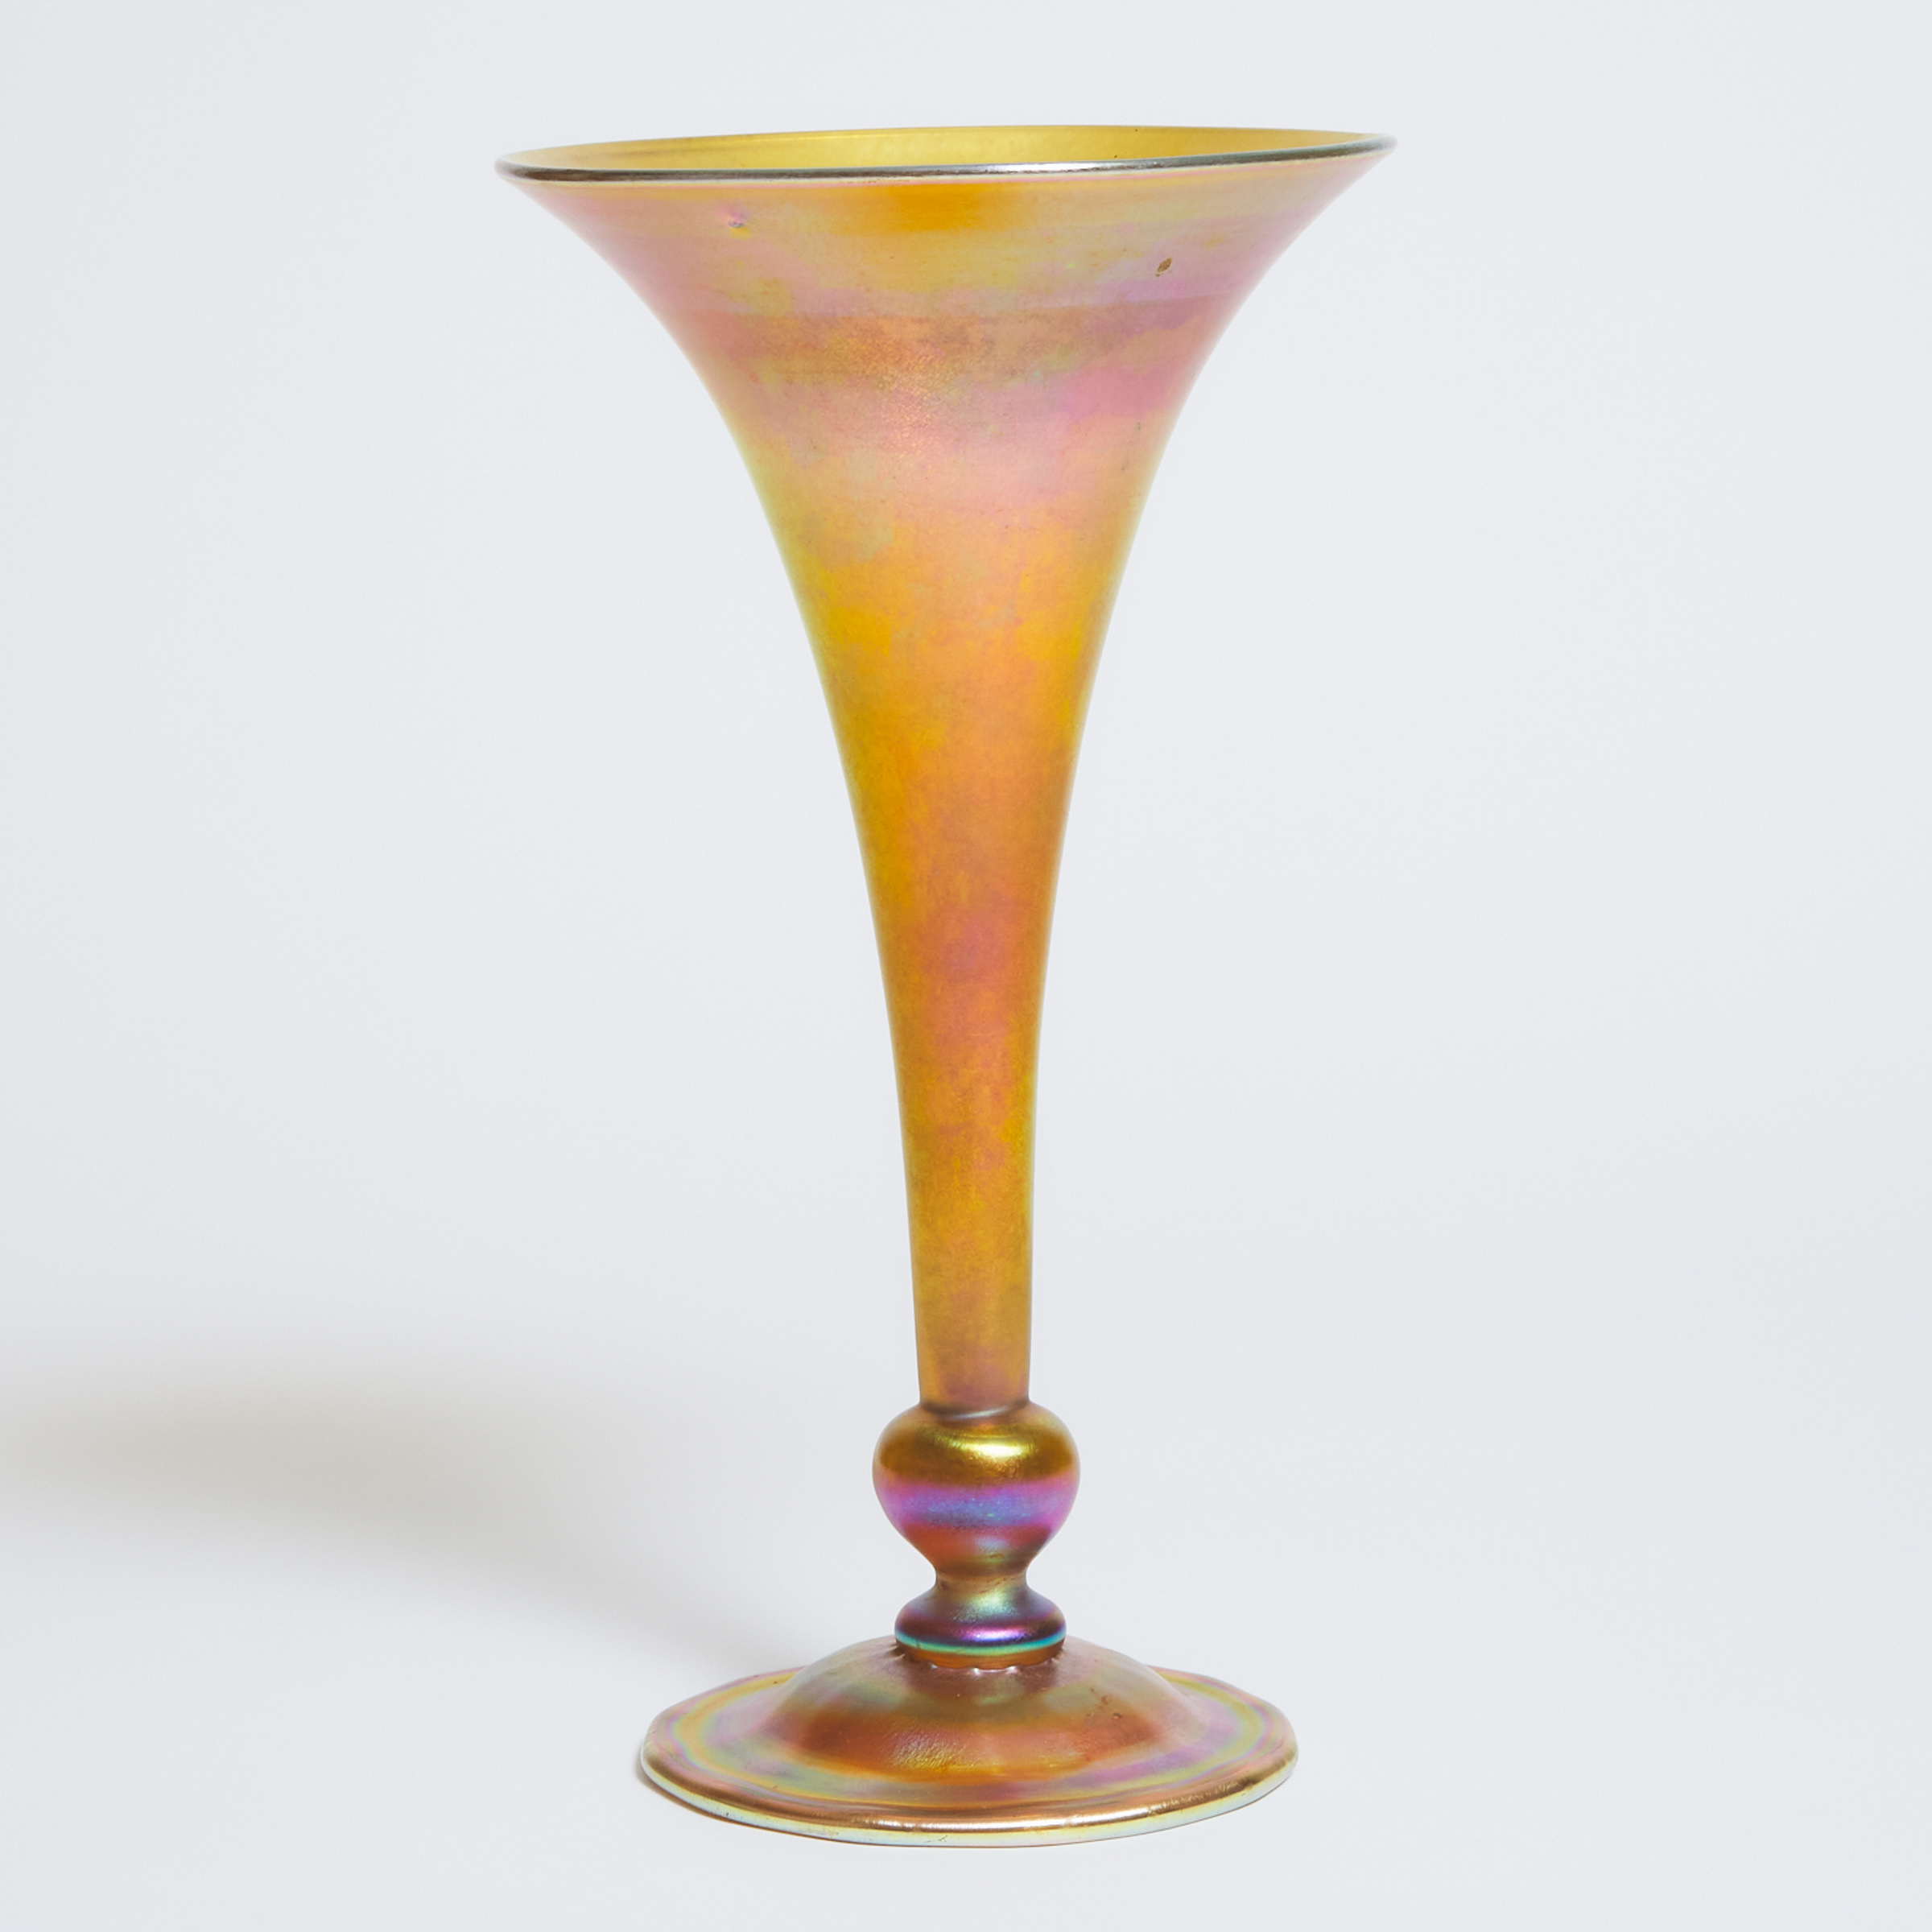 Tiffany 'Favrile' Iridescent Glass Trumpet Vase, c.1917